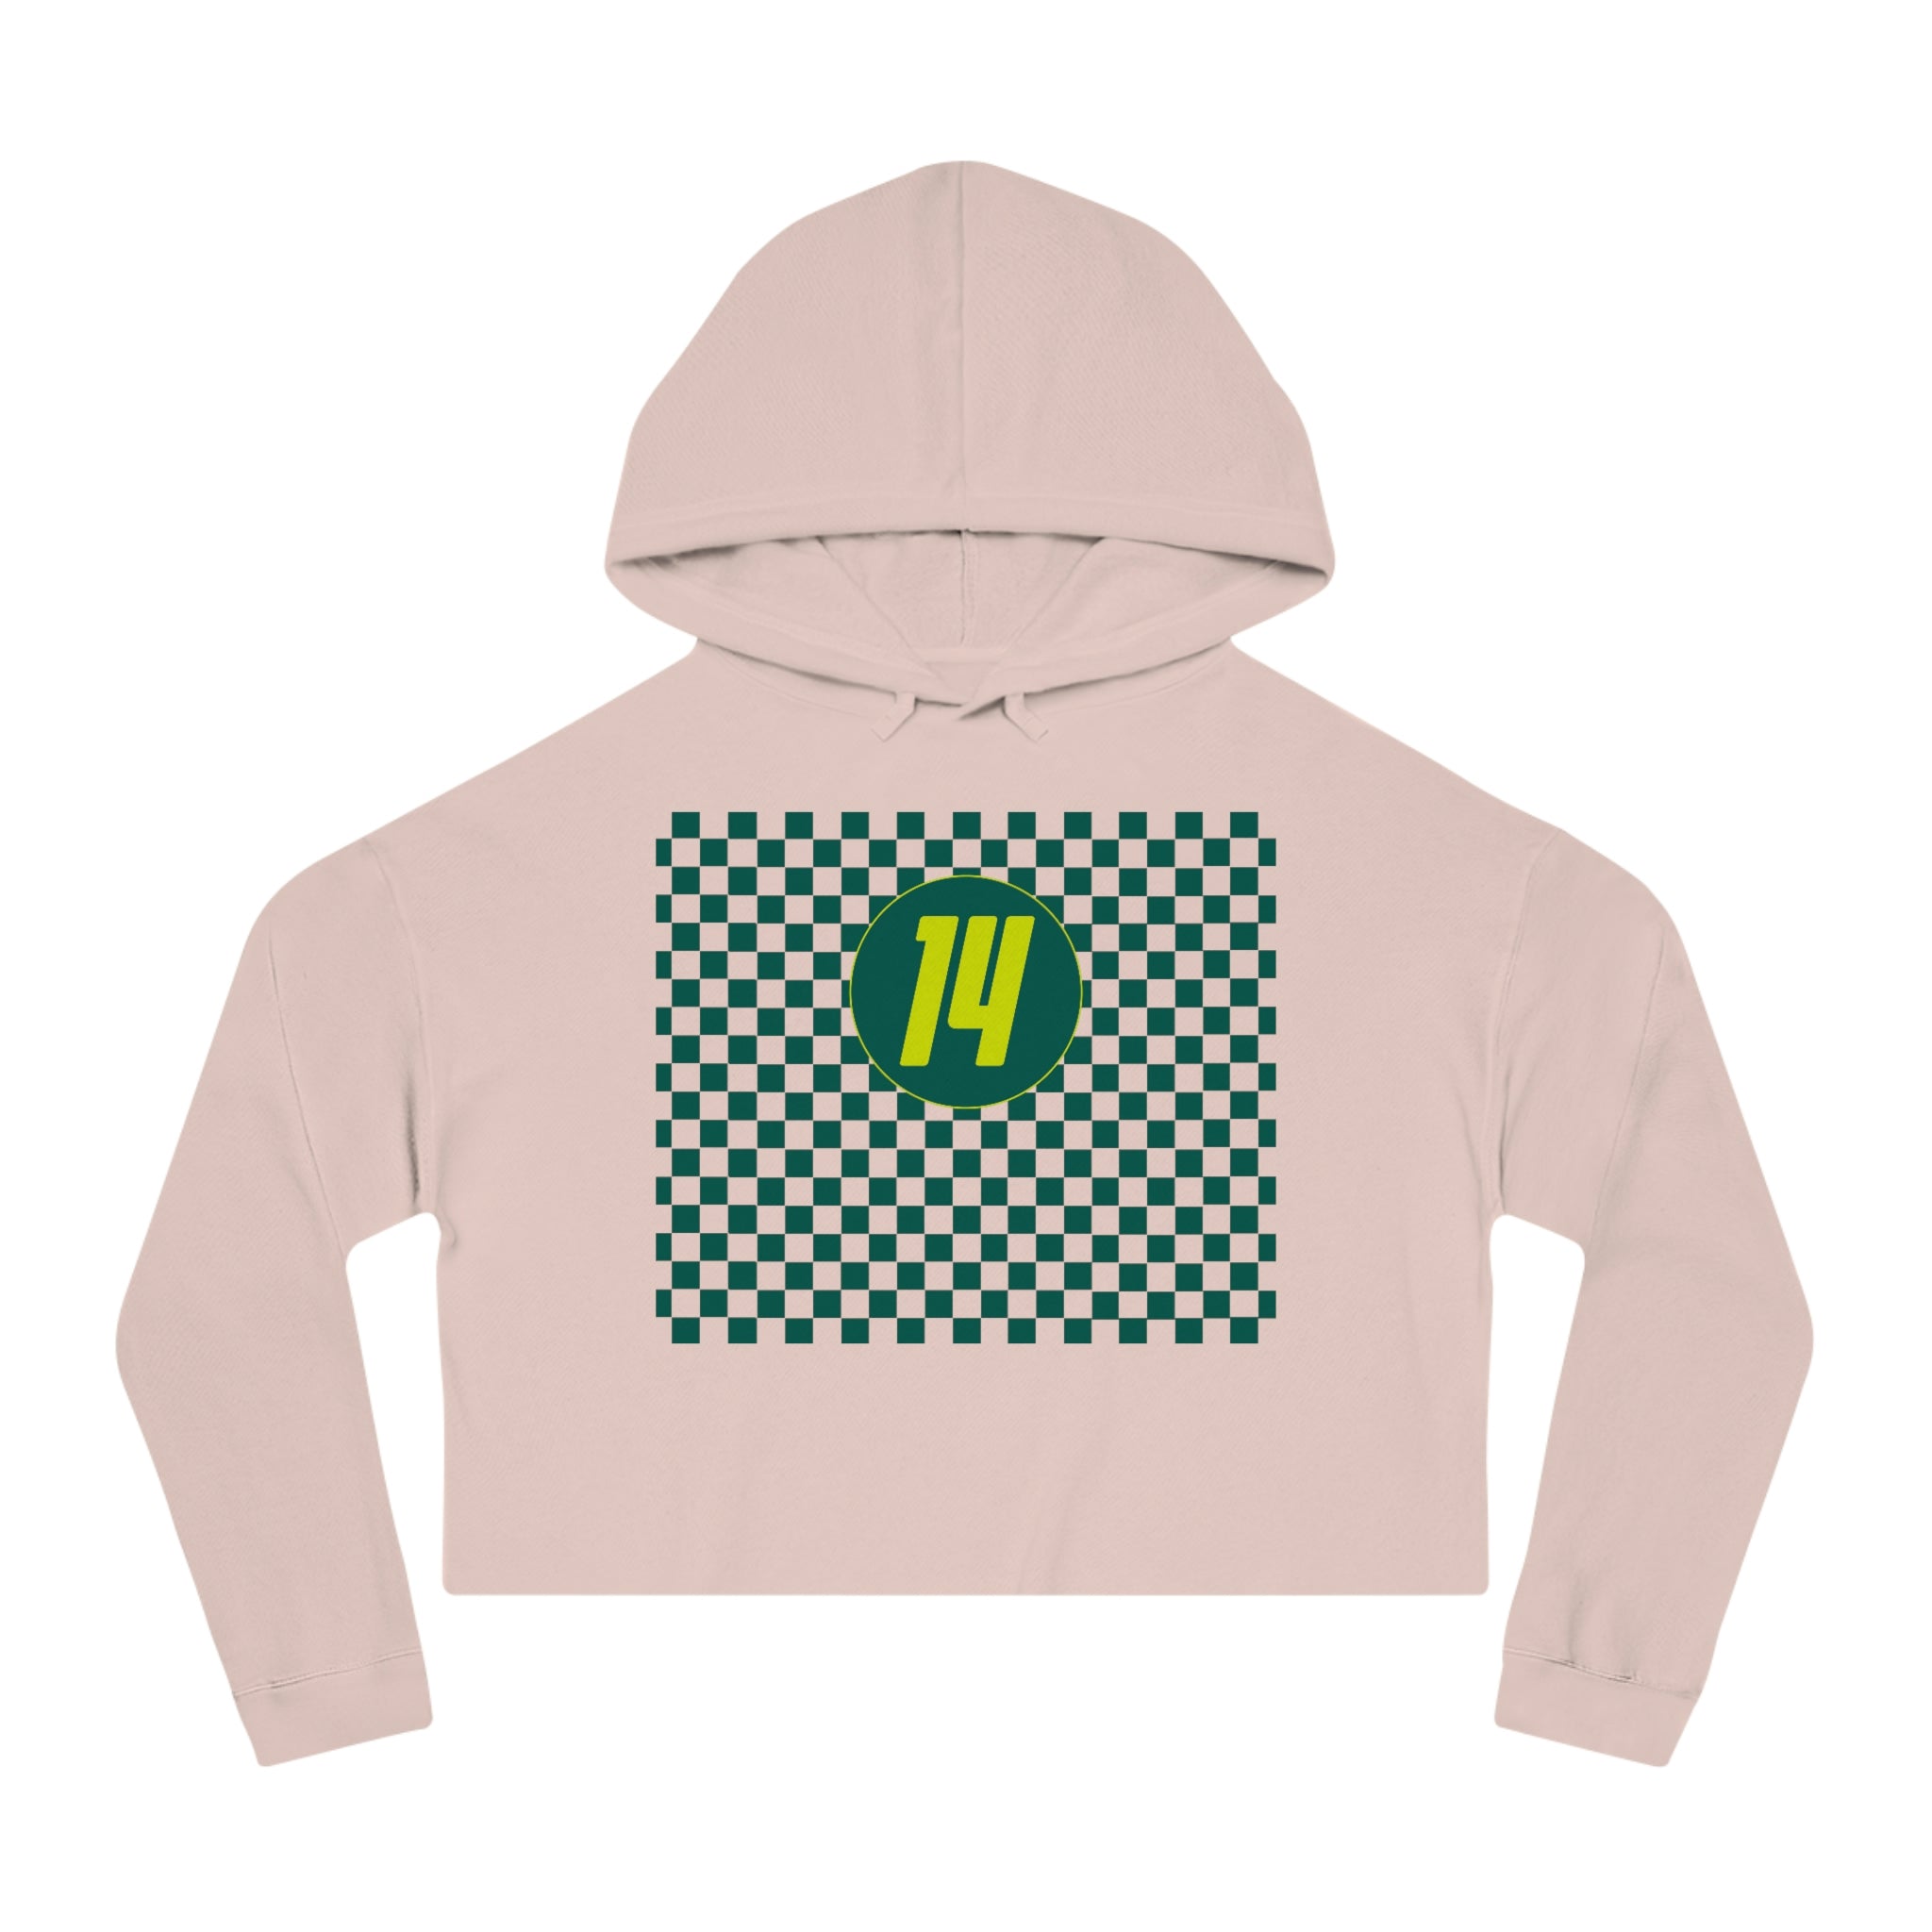 Checkered "14" Women’s Cropped Hooded Sweatshirt - FormulaFanatics